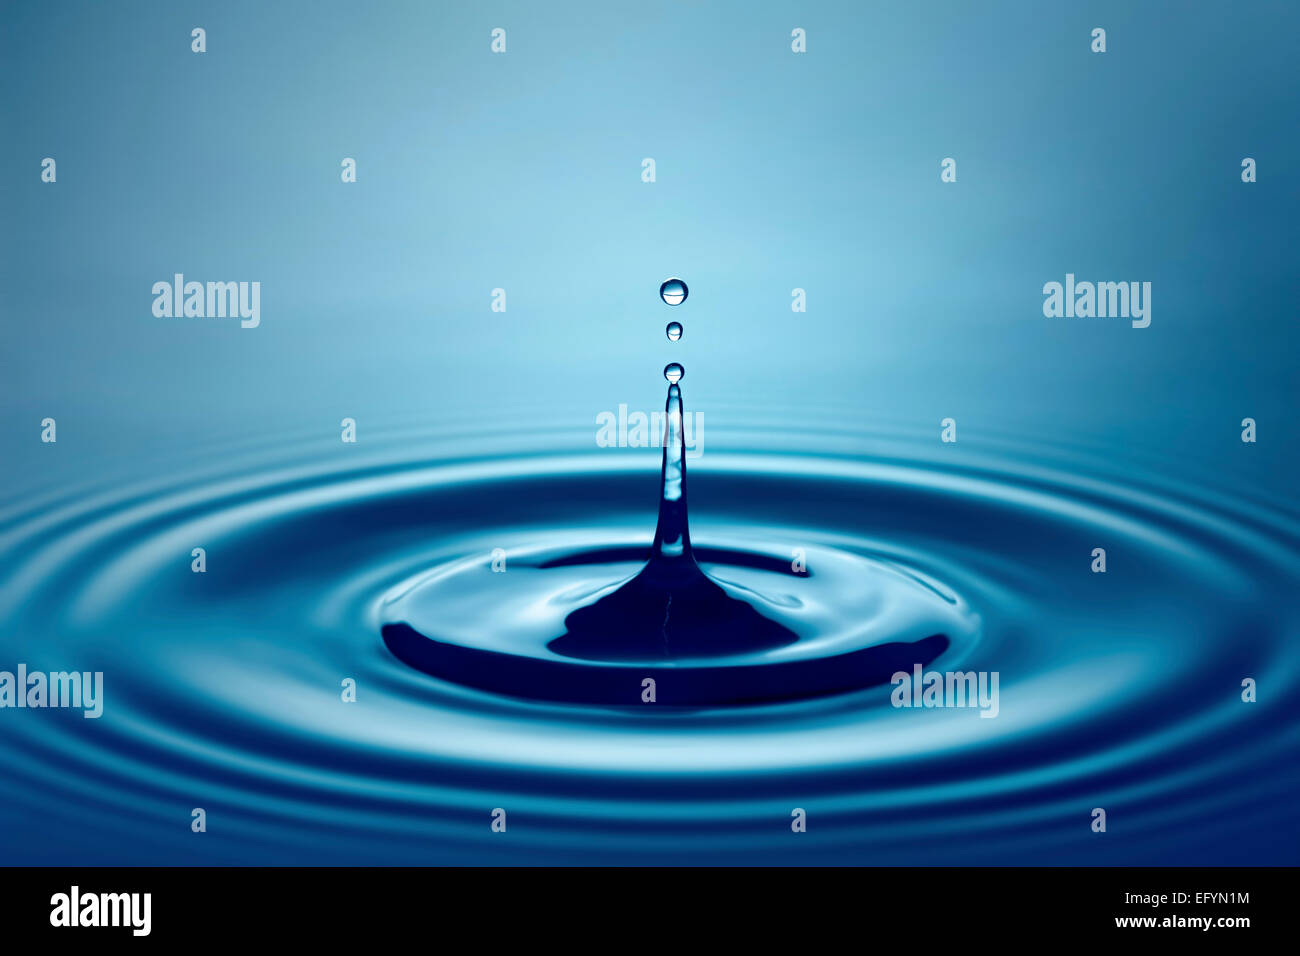 Water Drop Splash (Shallow DOF with focus on top drop) Stock Photo